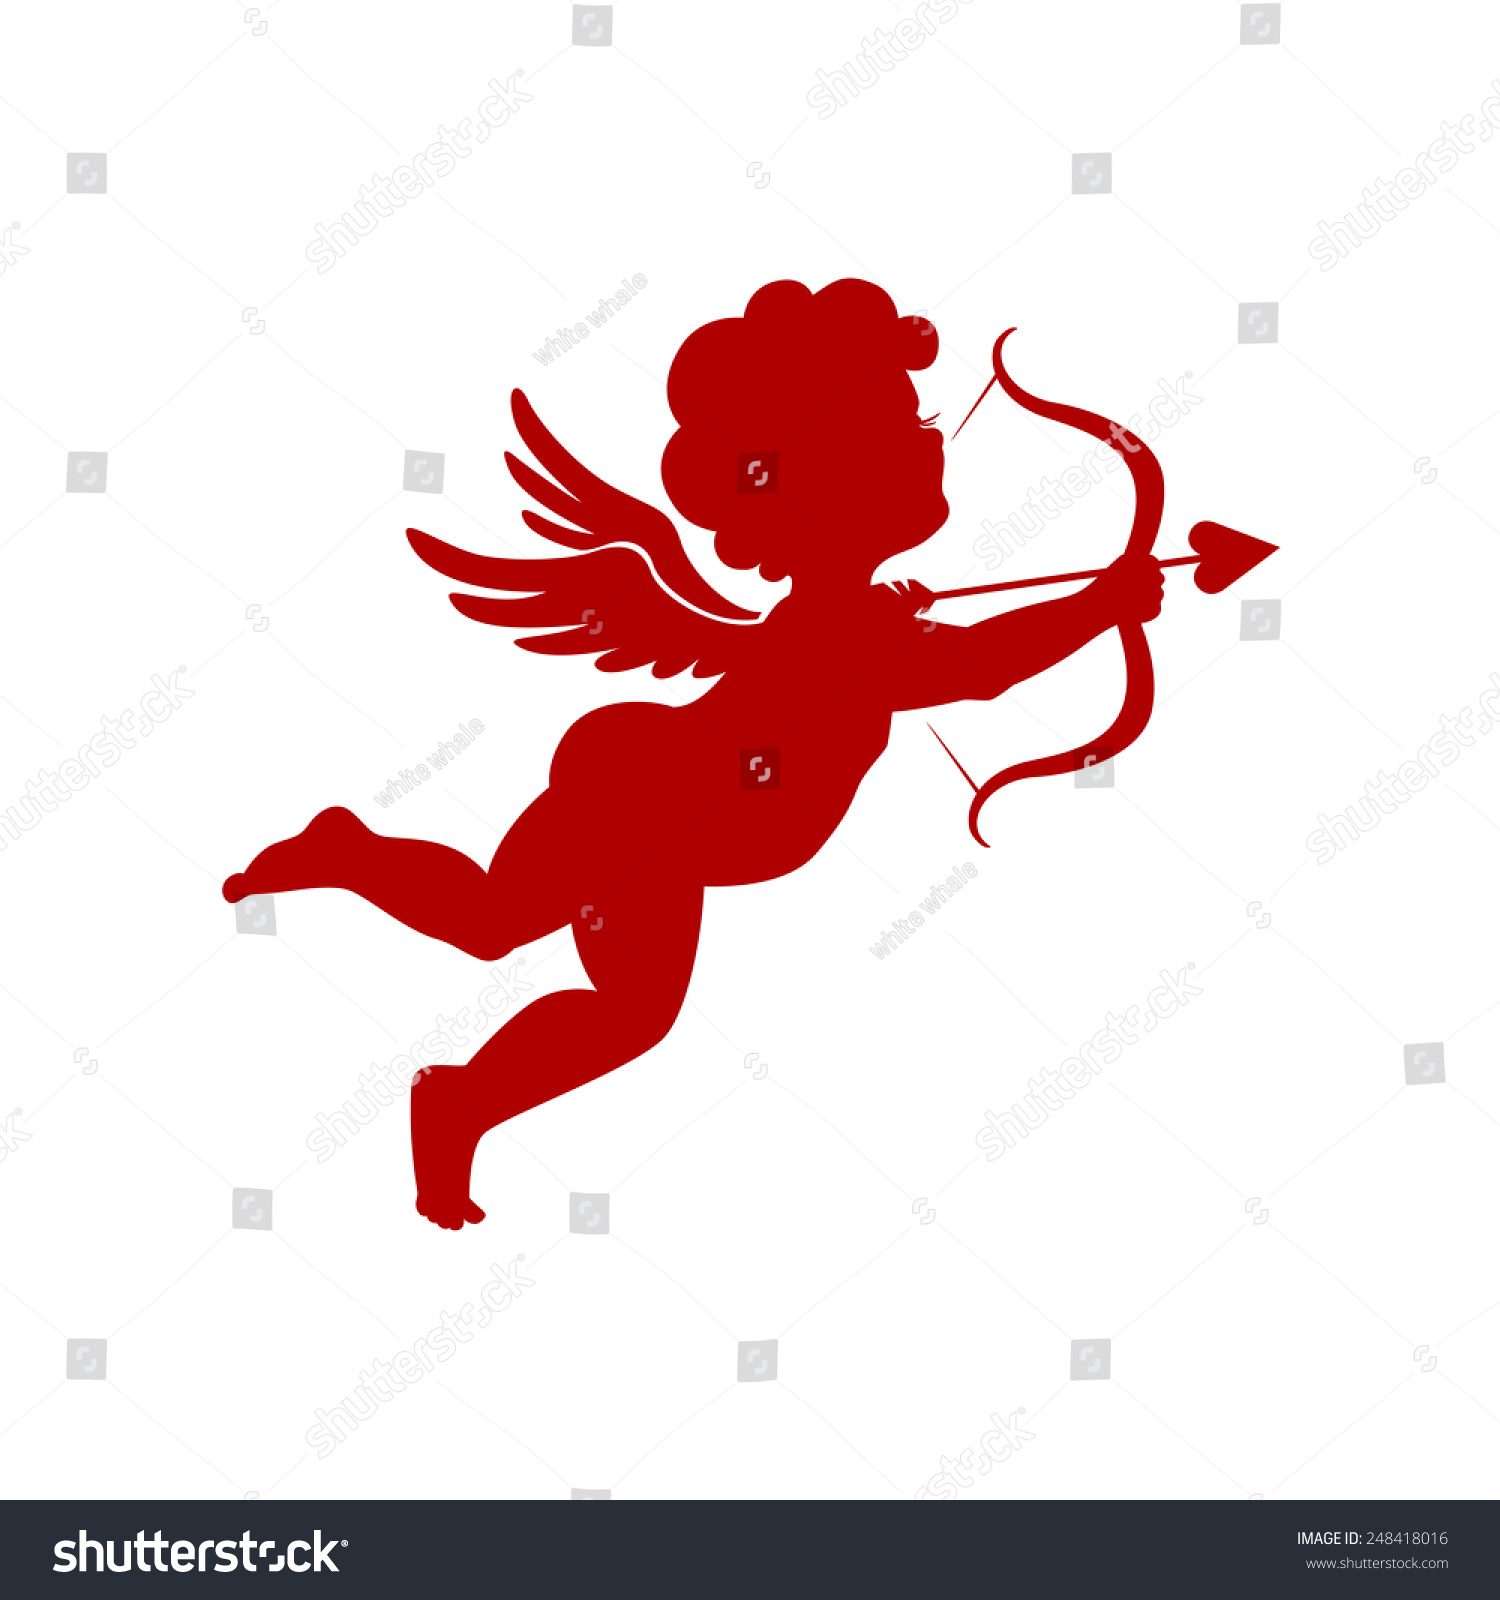 Cupid Silhouette Vector Illustration Stock Vector Royalty Free 248418016 Shutterstock 0549